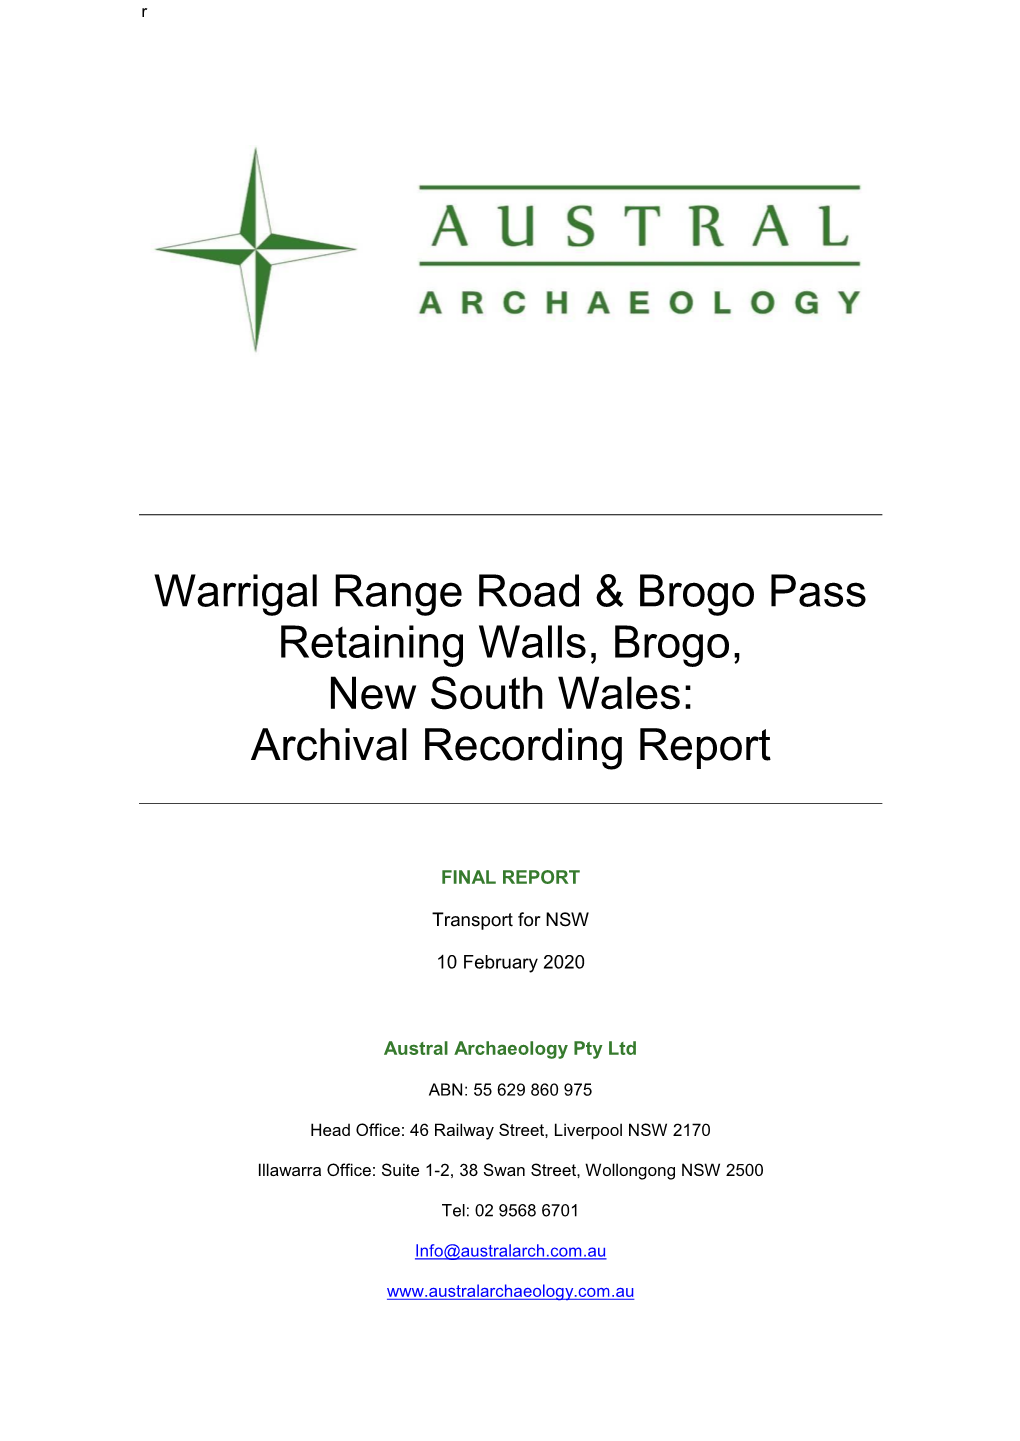 Warrigal Range Road Brogo Pass Archival Report 20200210 FINAL